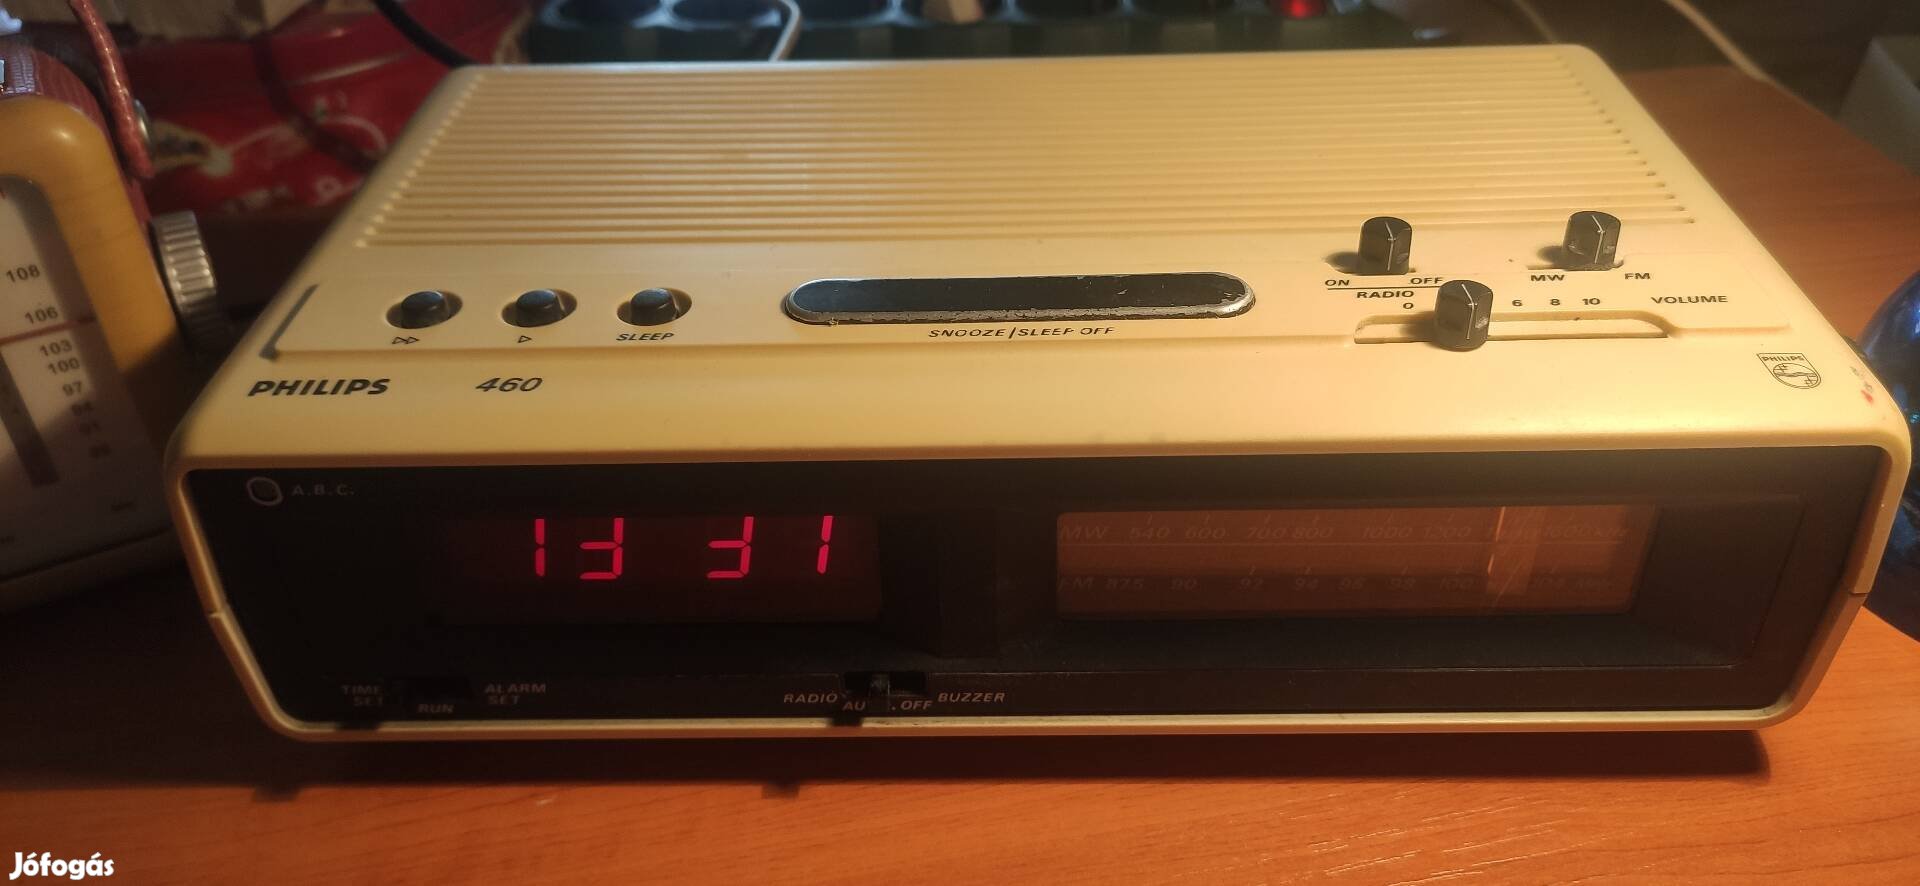 Philips eredeti 77-es hibátlan ebresztooras radio